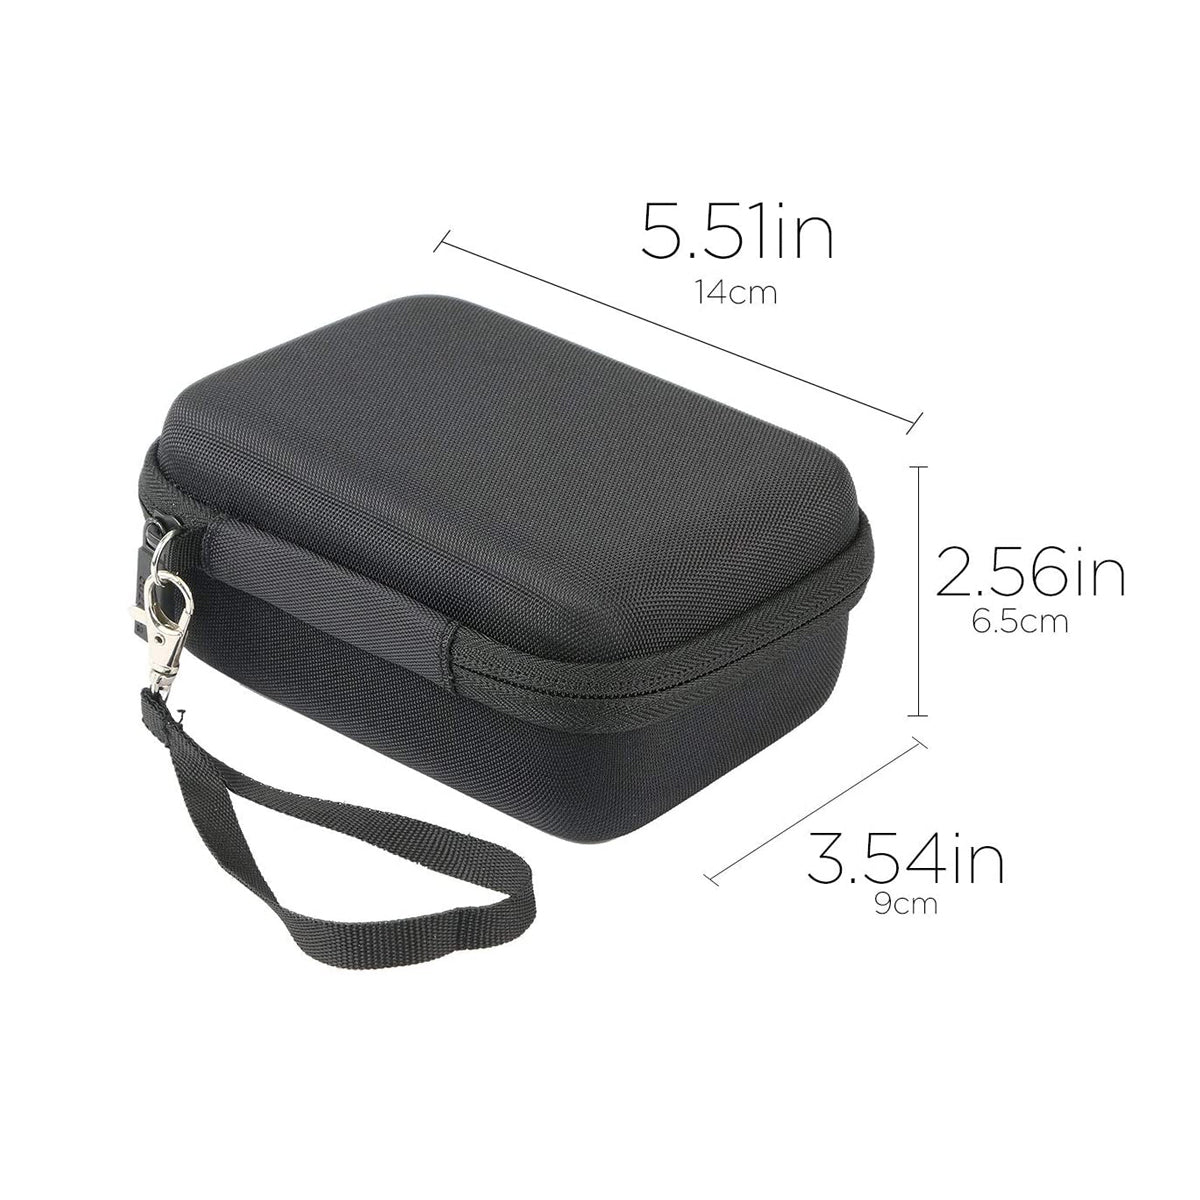 Zenko Instax Mini Evo Instant Camera Mini Link 2 Smartphone Printer Bag Accessories Protector Hard Case Lanyard (Black)